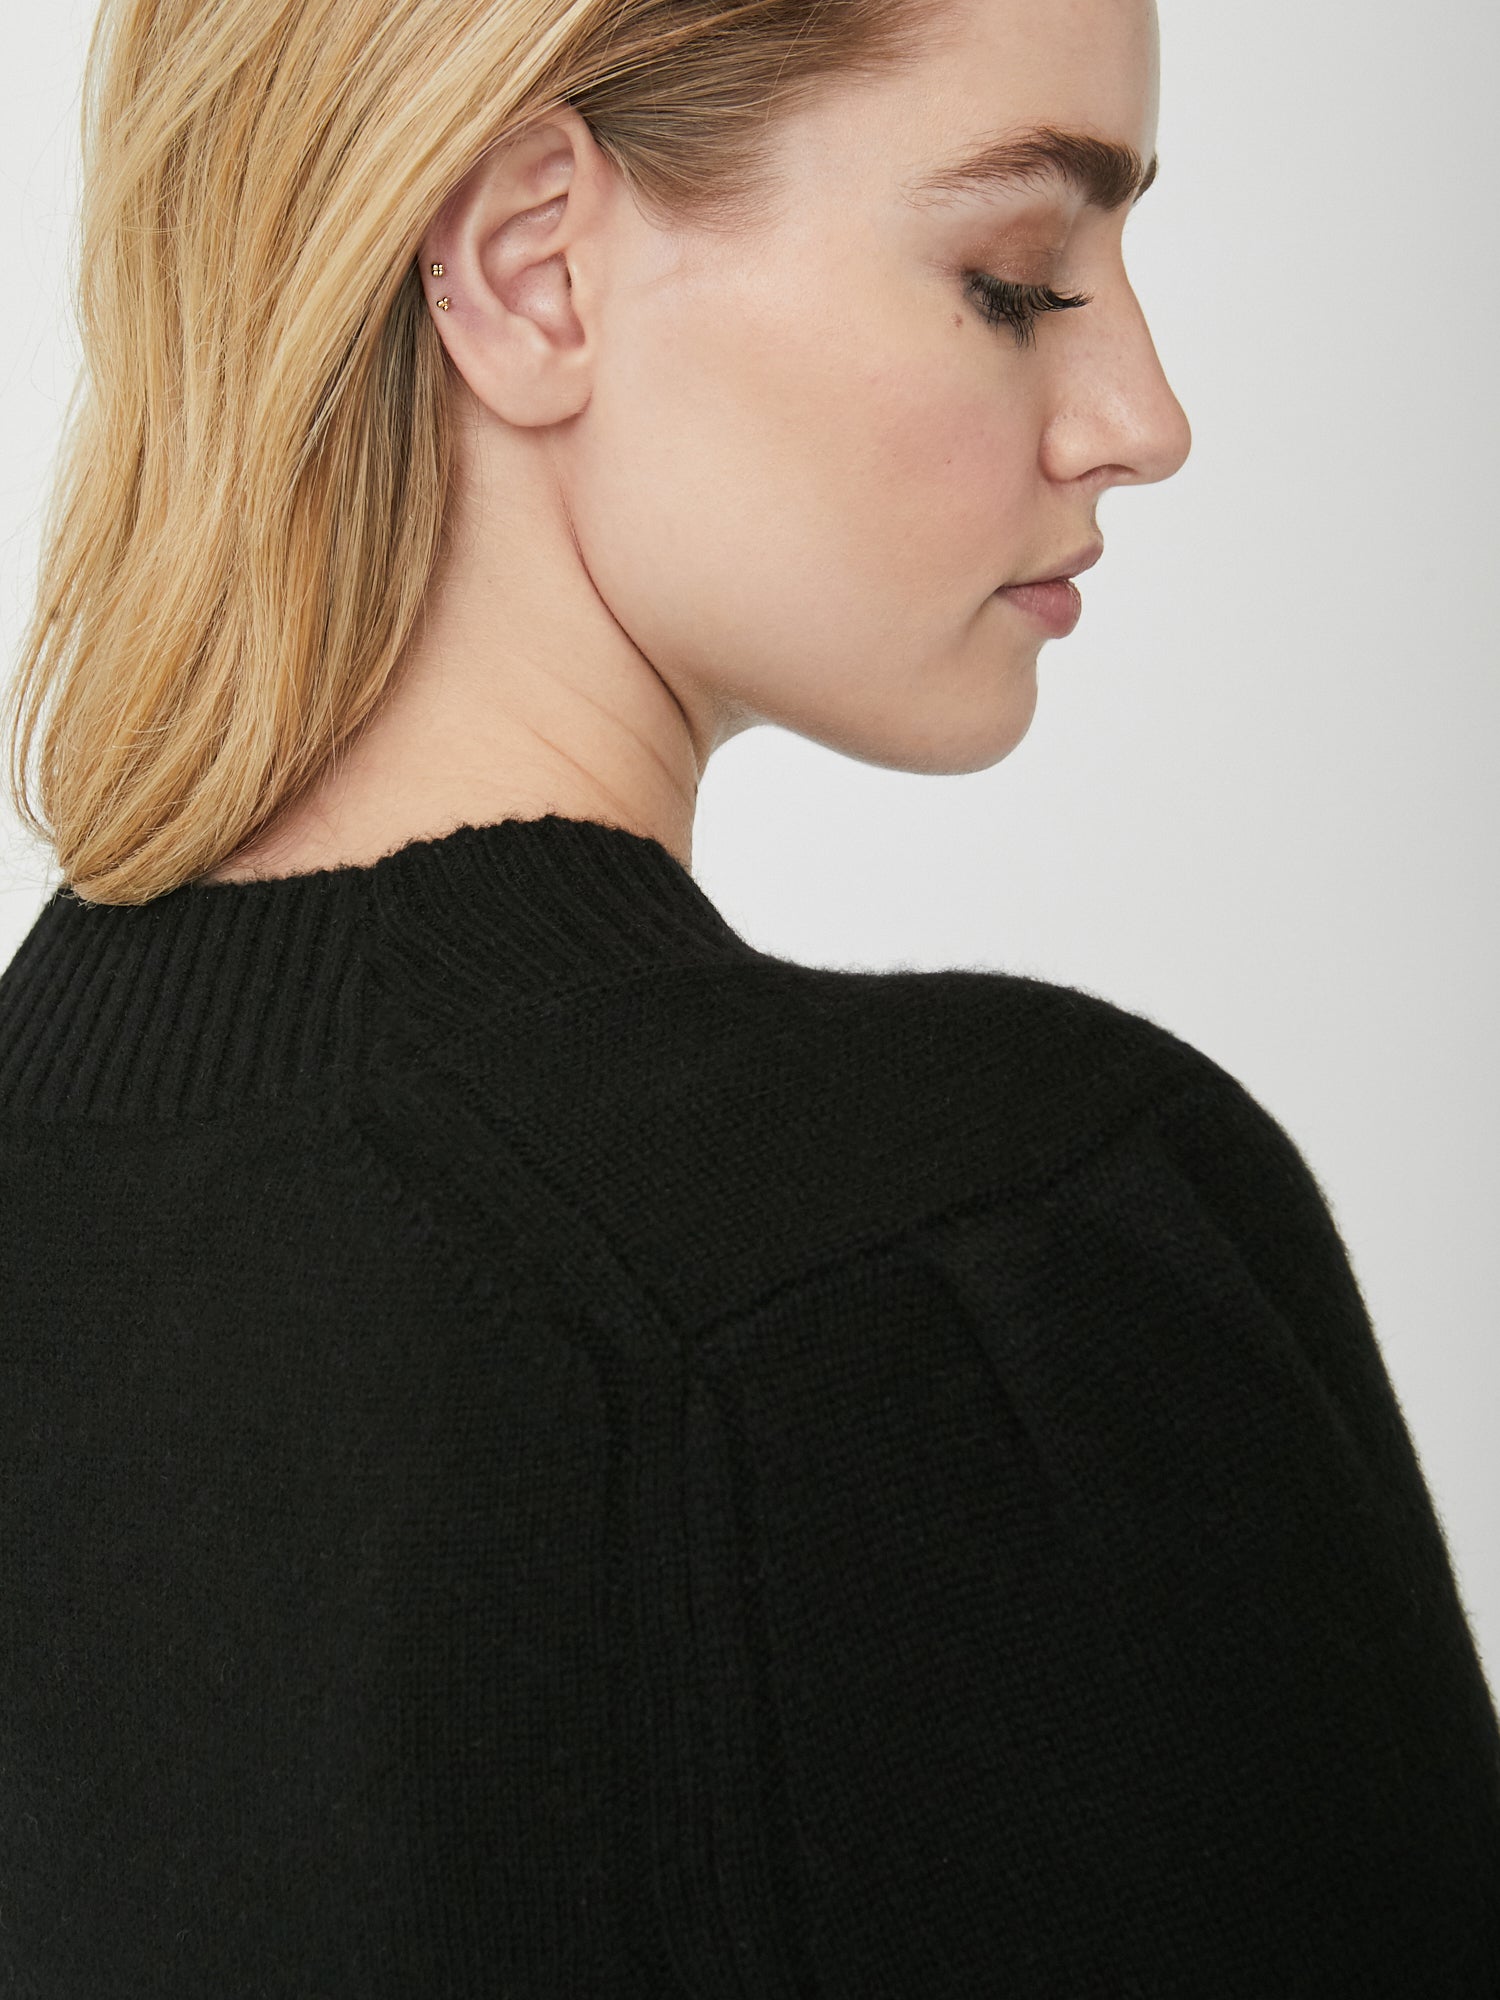 Eton black layered crewneck sweater close up